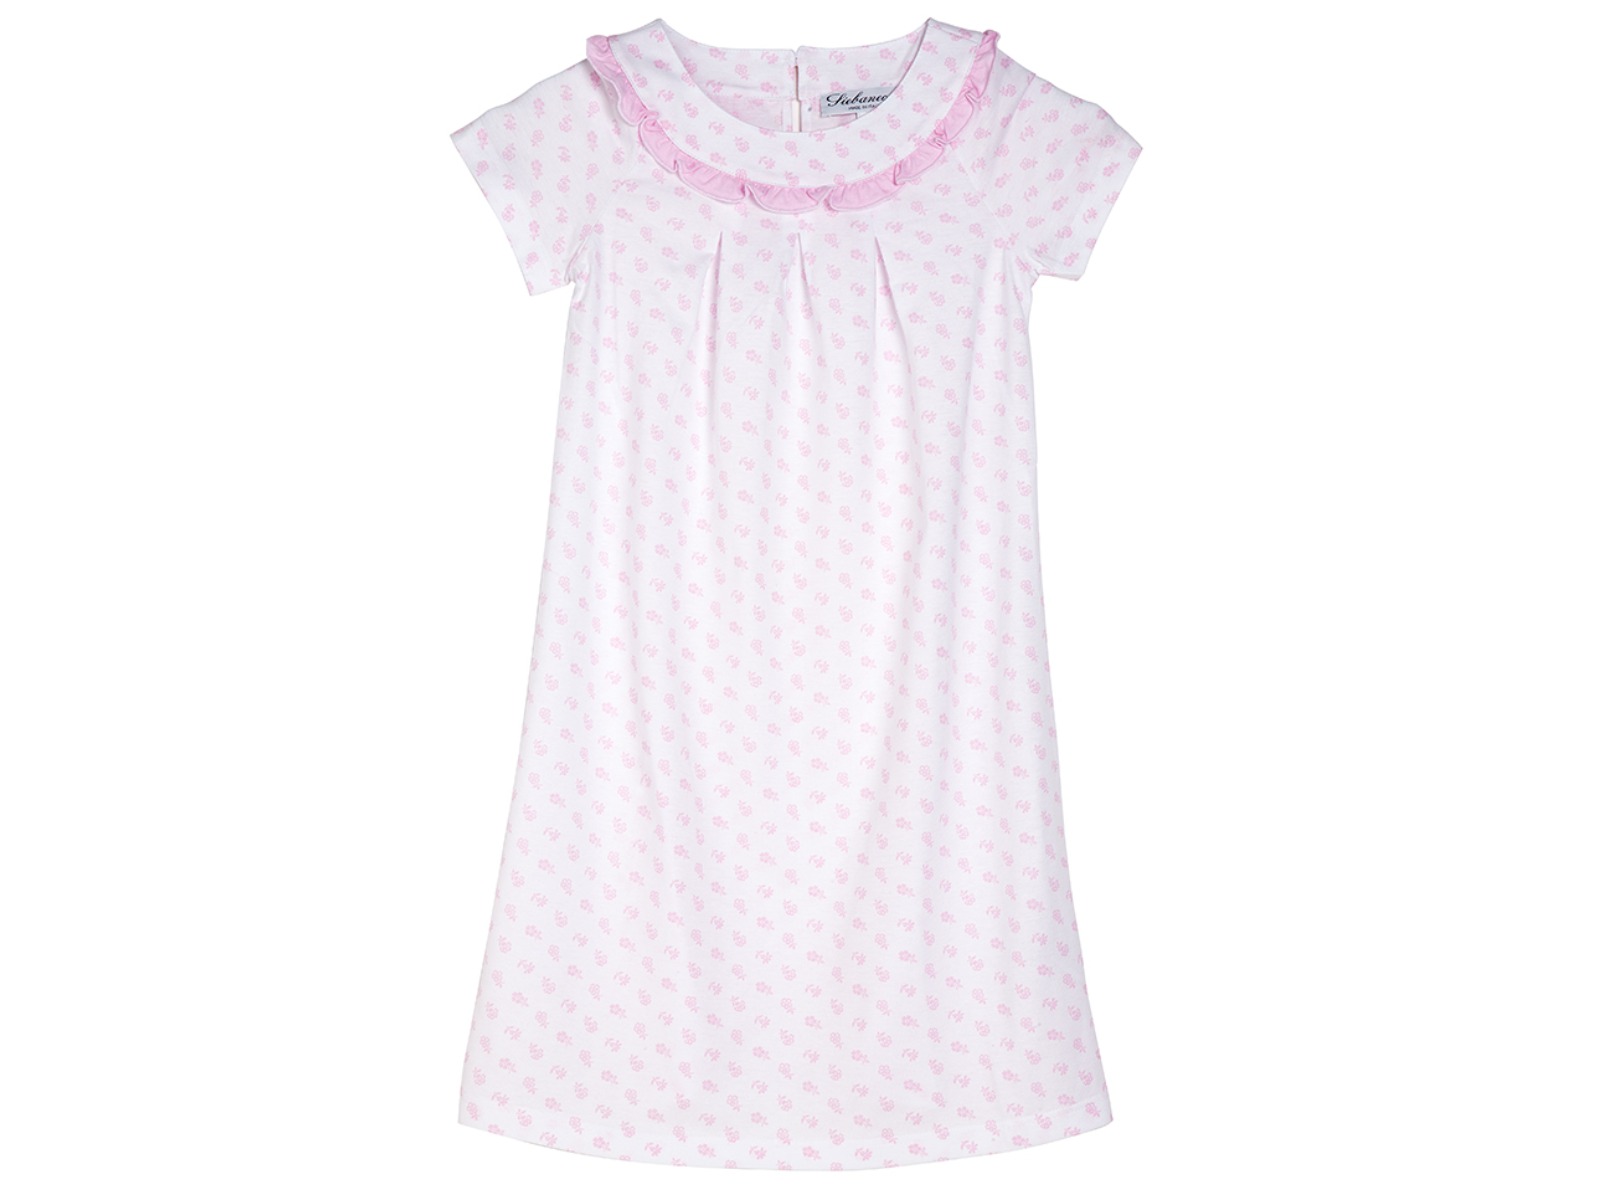 Siebaneck, i pigiami artigianali : -bambina - mod. 129bianca fiorellini rosa